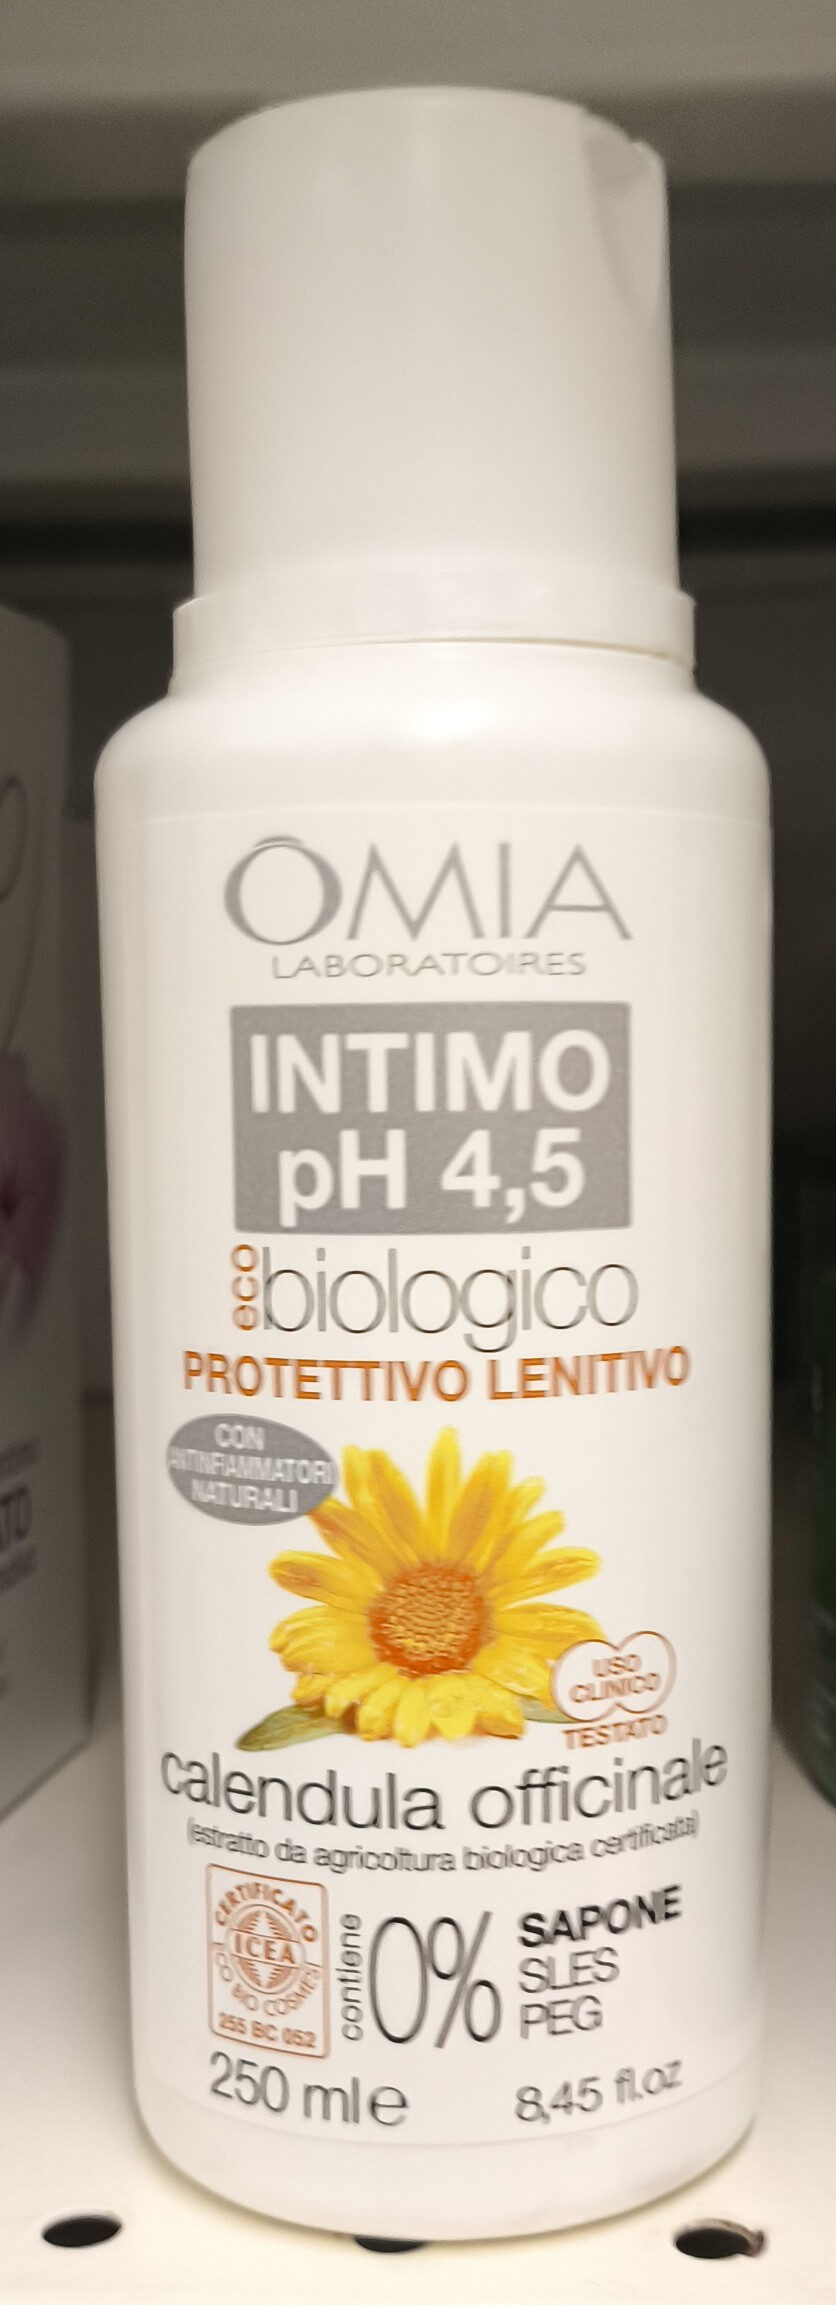 Intimo ph 4,5 - Produit - it